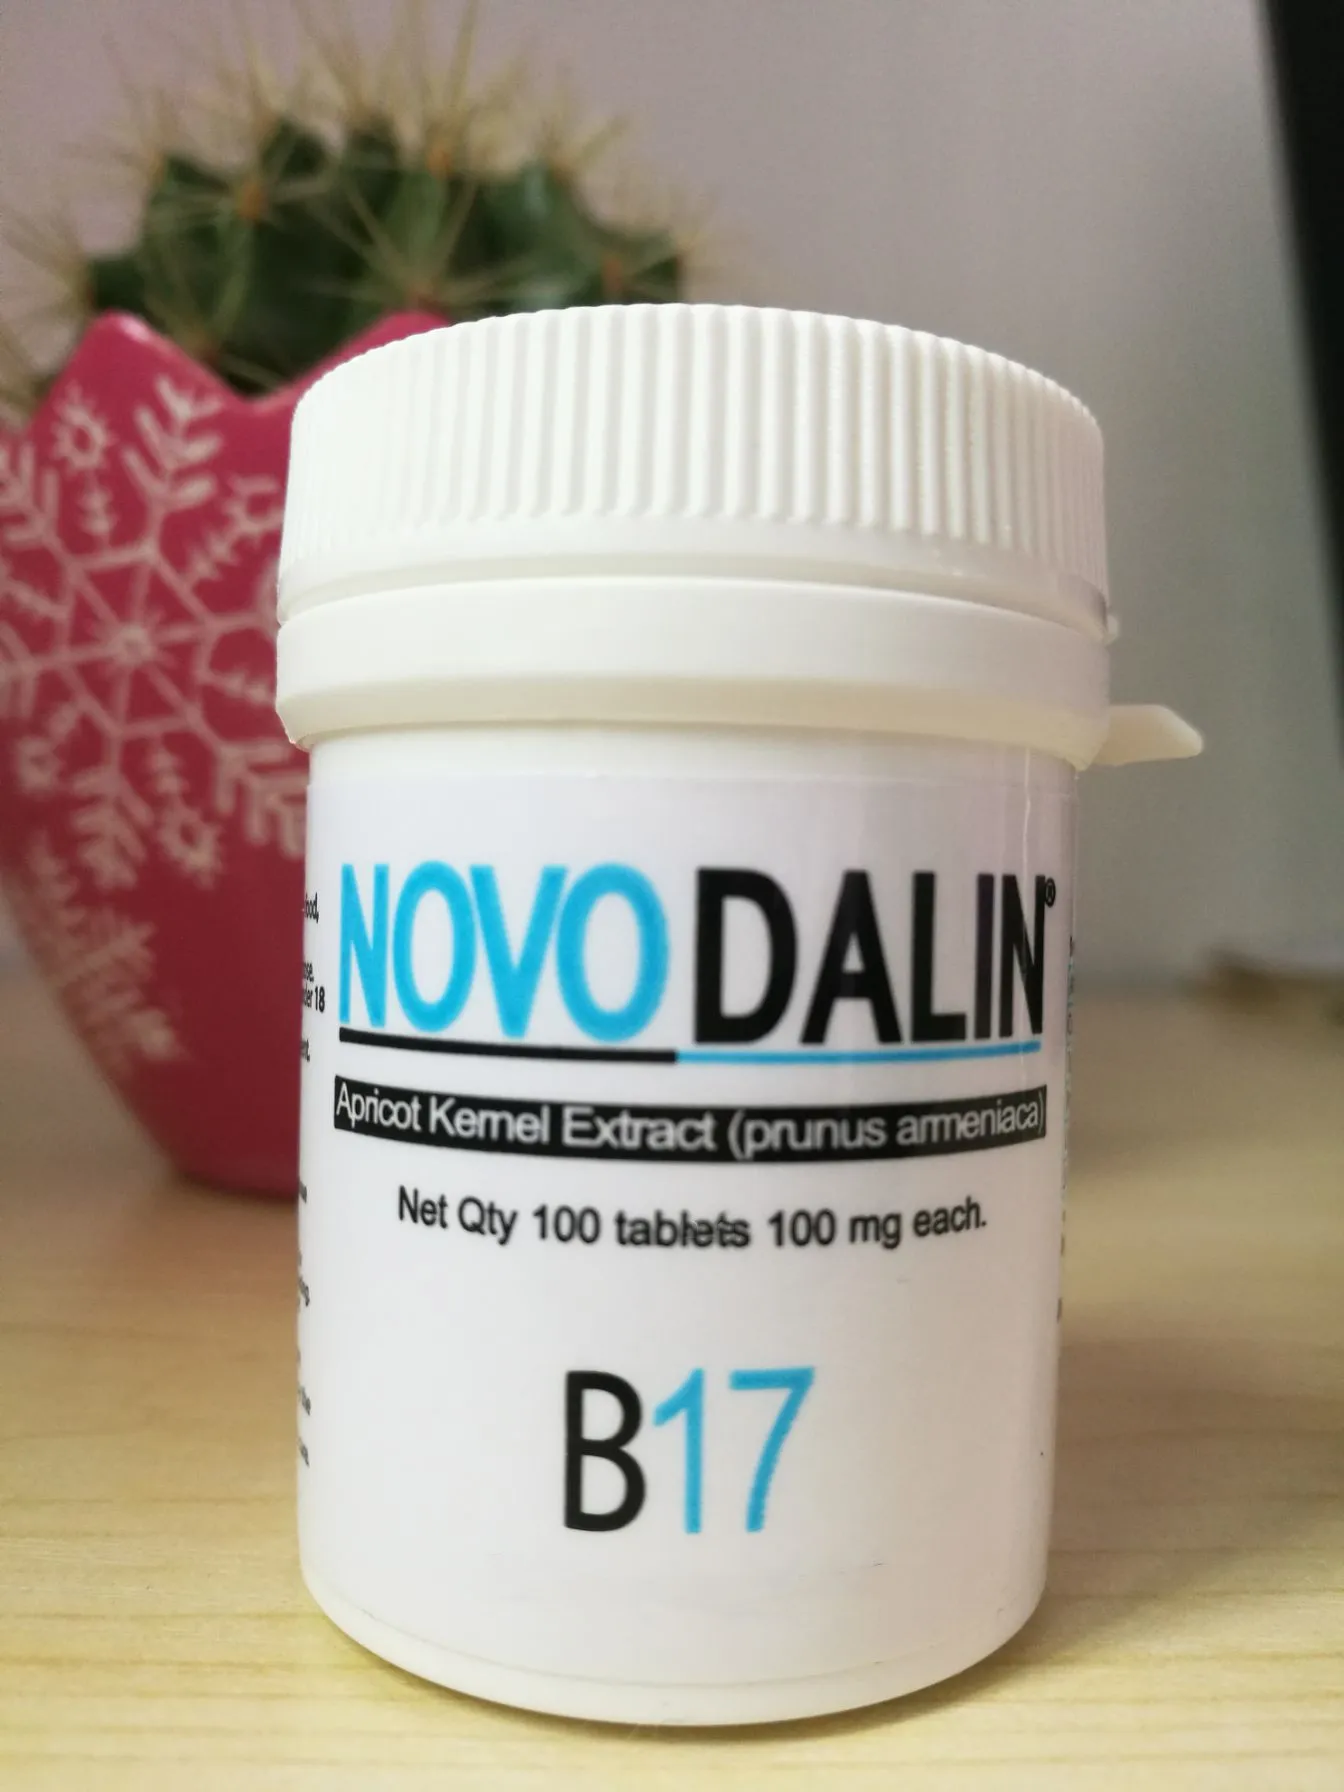 

1х витамин новодалин B17 амигдалин 100 мг/500 мг 100 колпачков предотвращают C a ncer